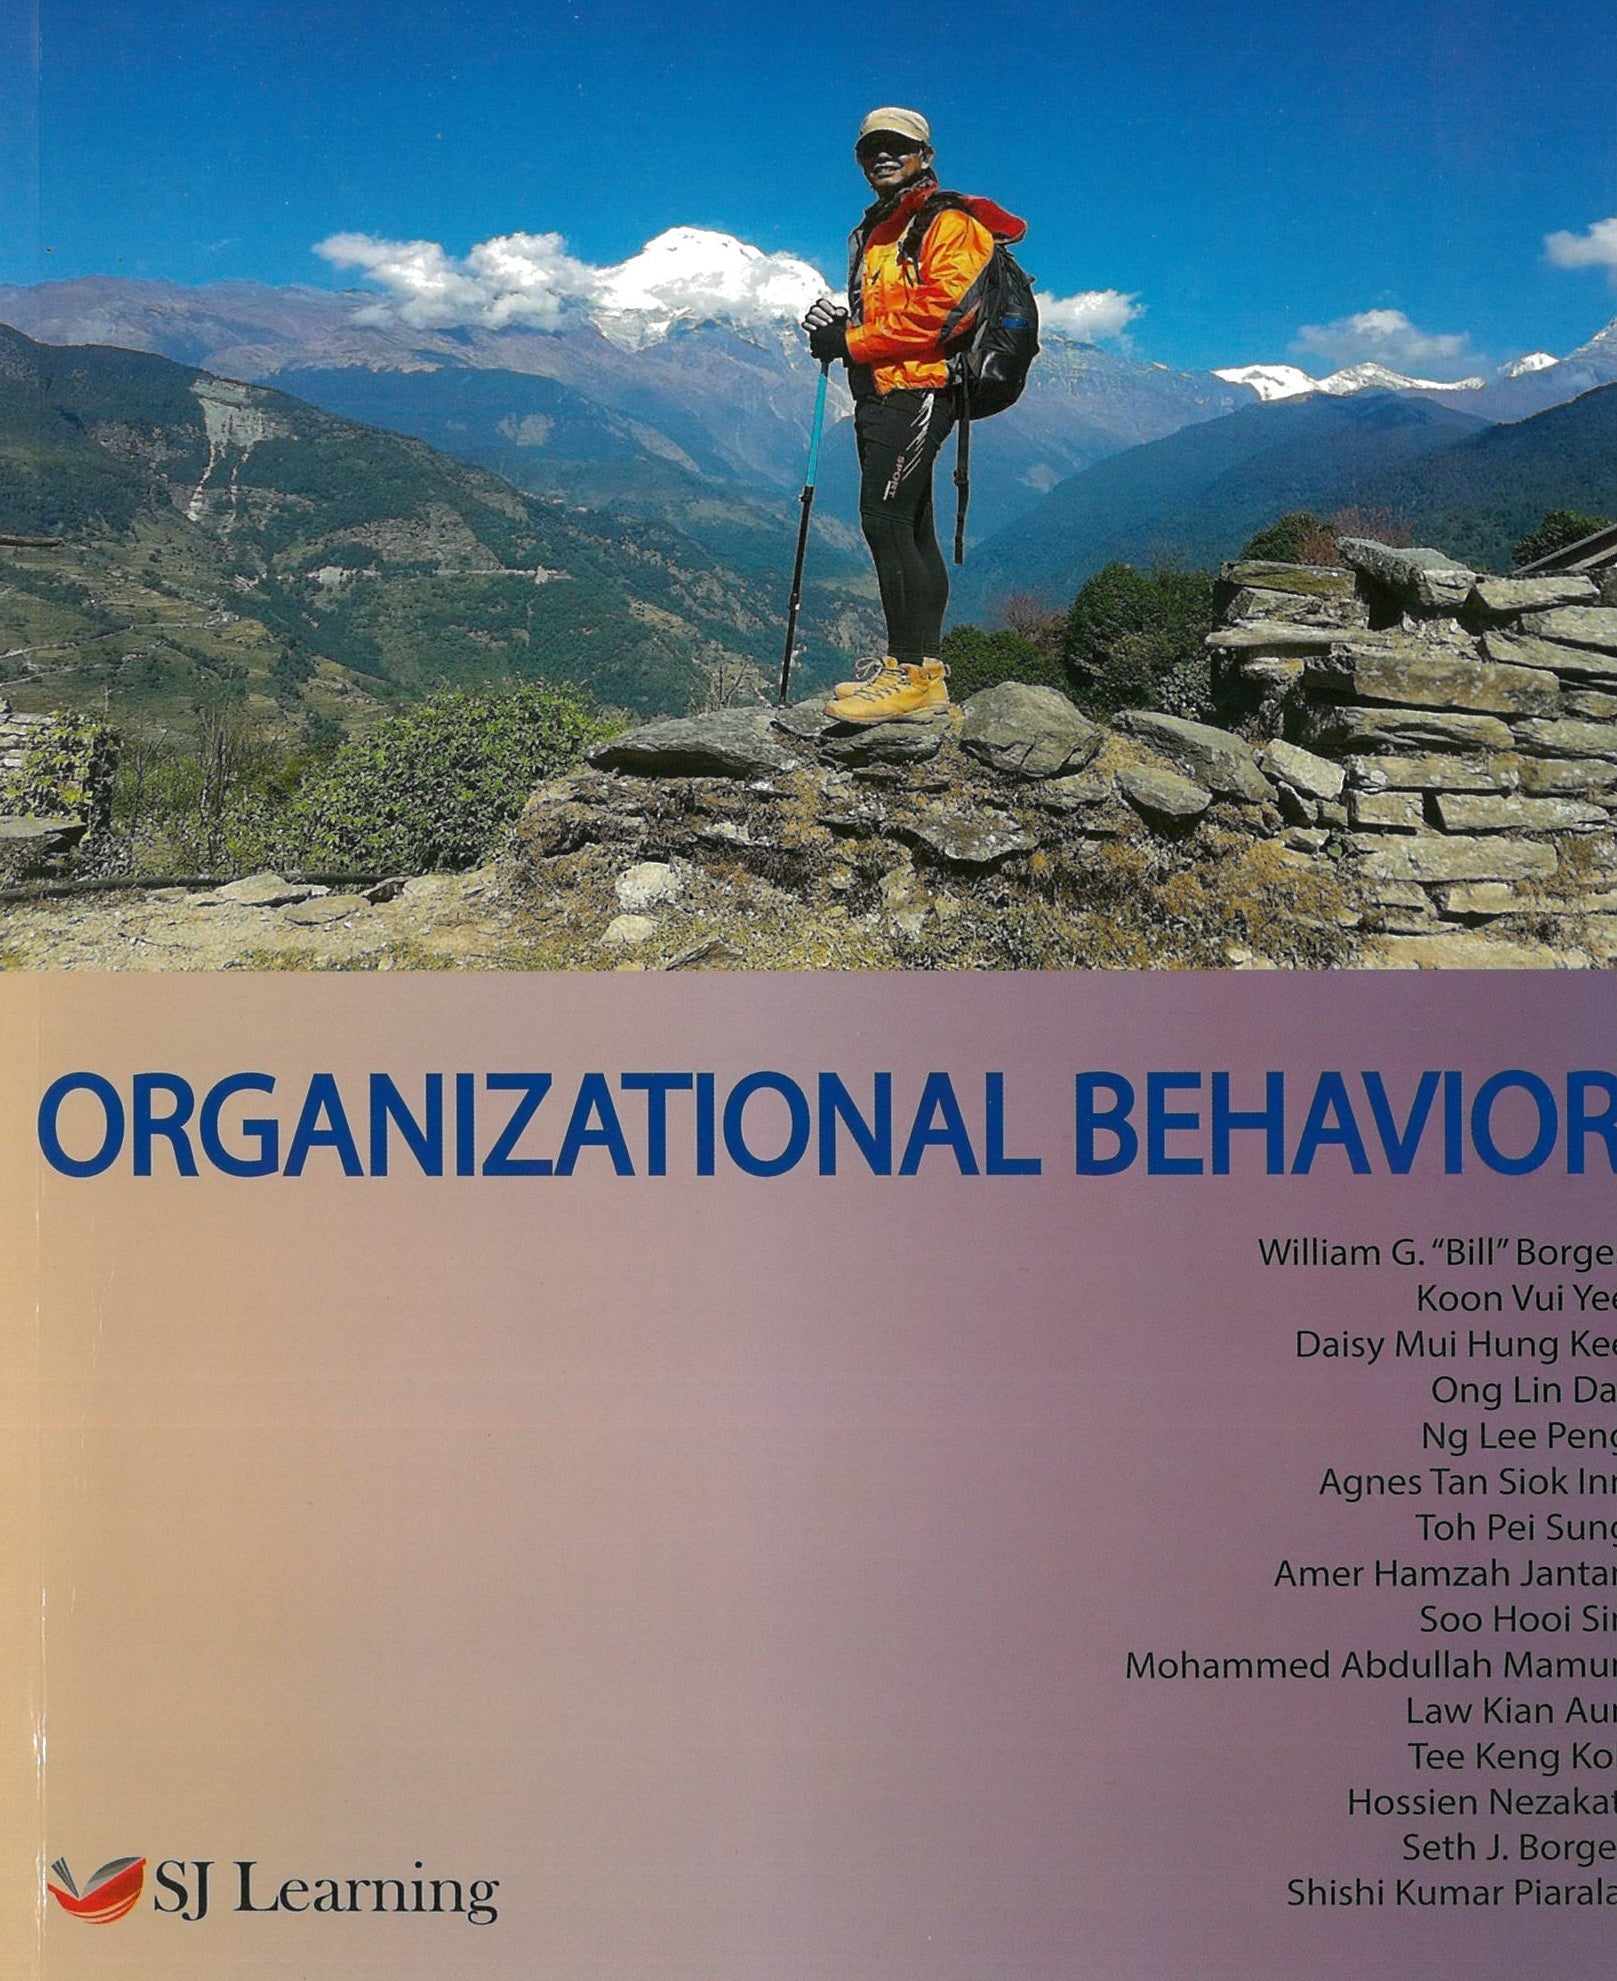 Organizational Behavior: Borges and et al. - 9789671344064 - SJ Learning